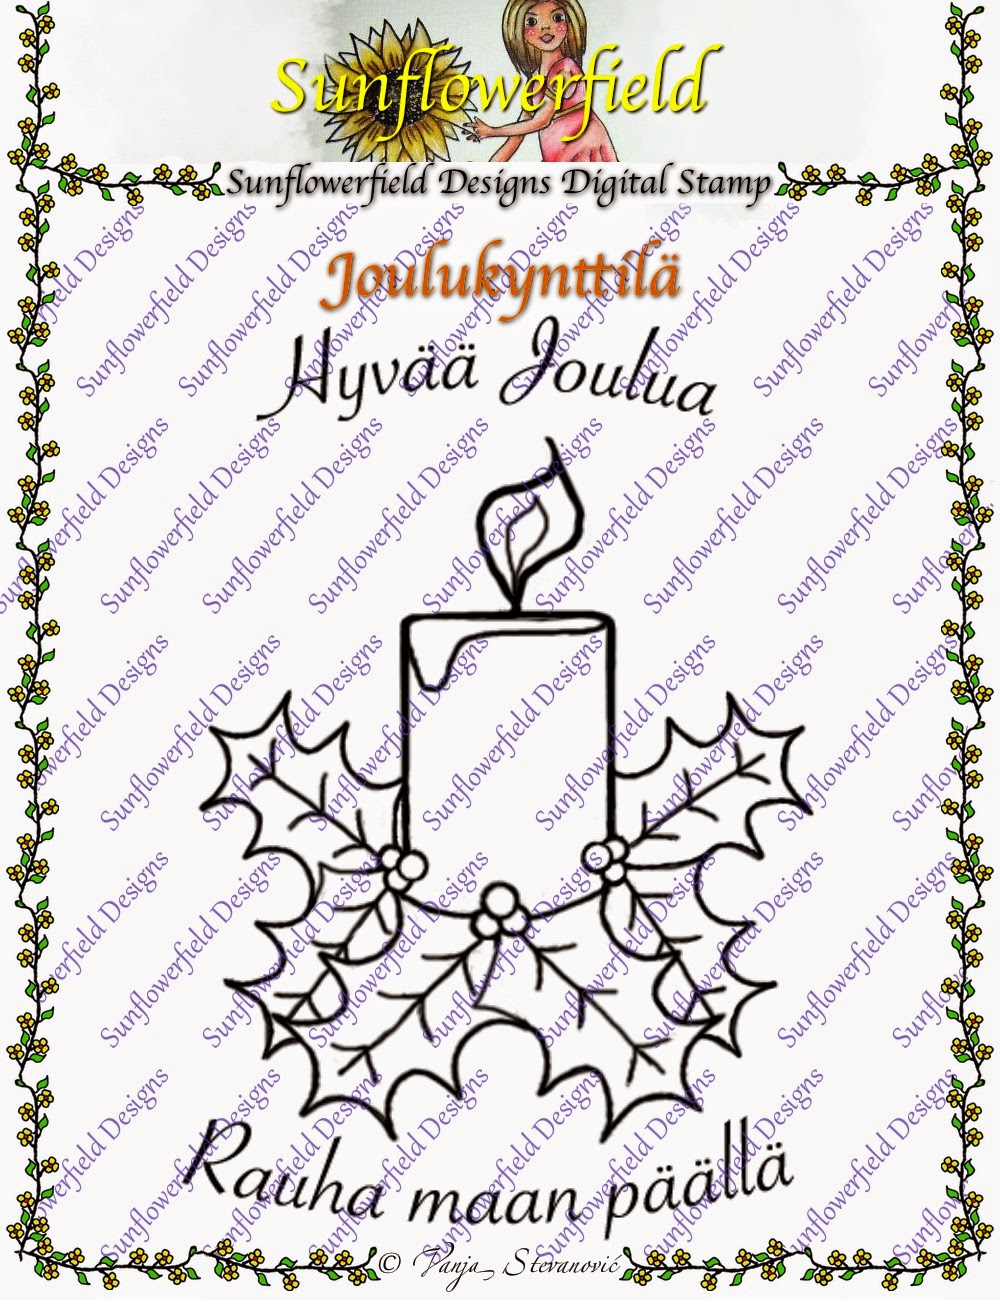 http://www.sunflowerfield.fi/new-joulukynttila-designed-vanja-stevanovi263-for-sunflowerfield-designs-p-1052.html